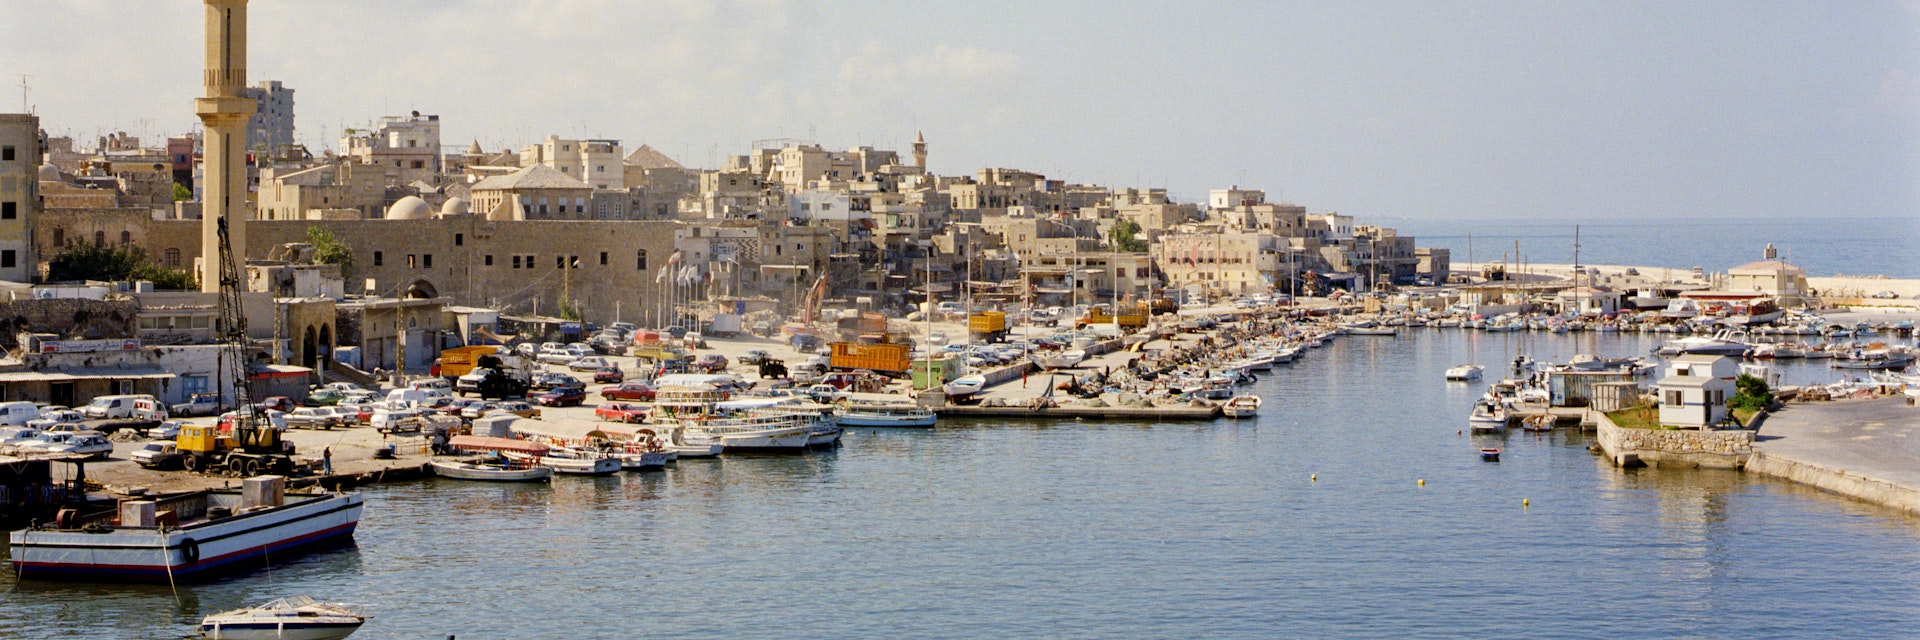 Port of Tyre (Sour), Lebanon